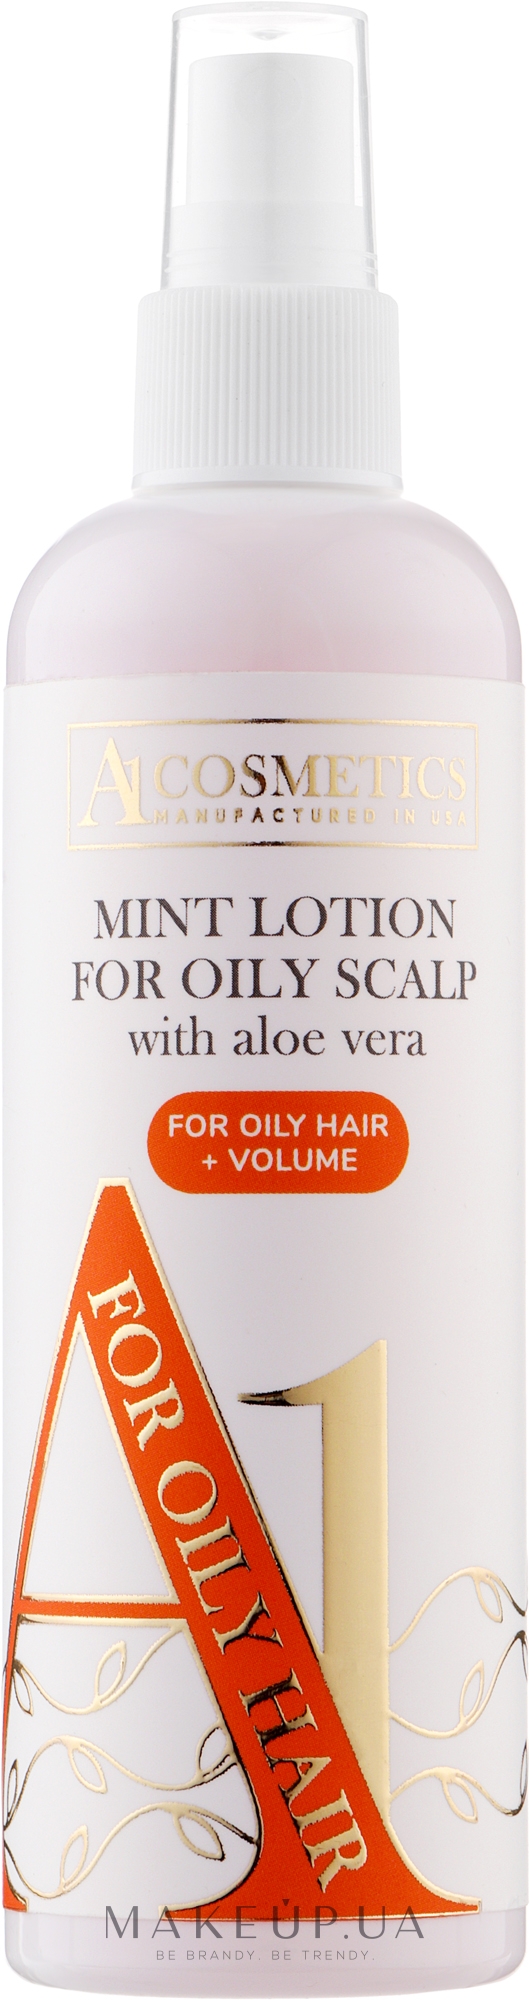 М'ятний лосьйон для жирної шкіри голови - A1 Cosmetics For Oily Hair Mint Lotion For Oily Scalp With Aloe Vera + Volume — фото 150ml